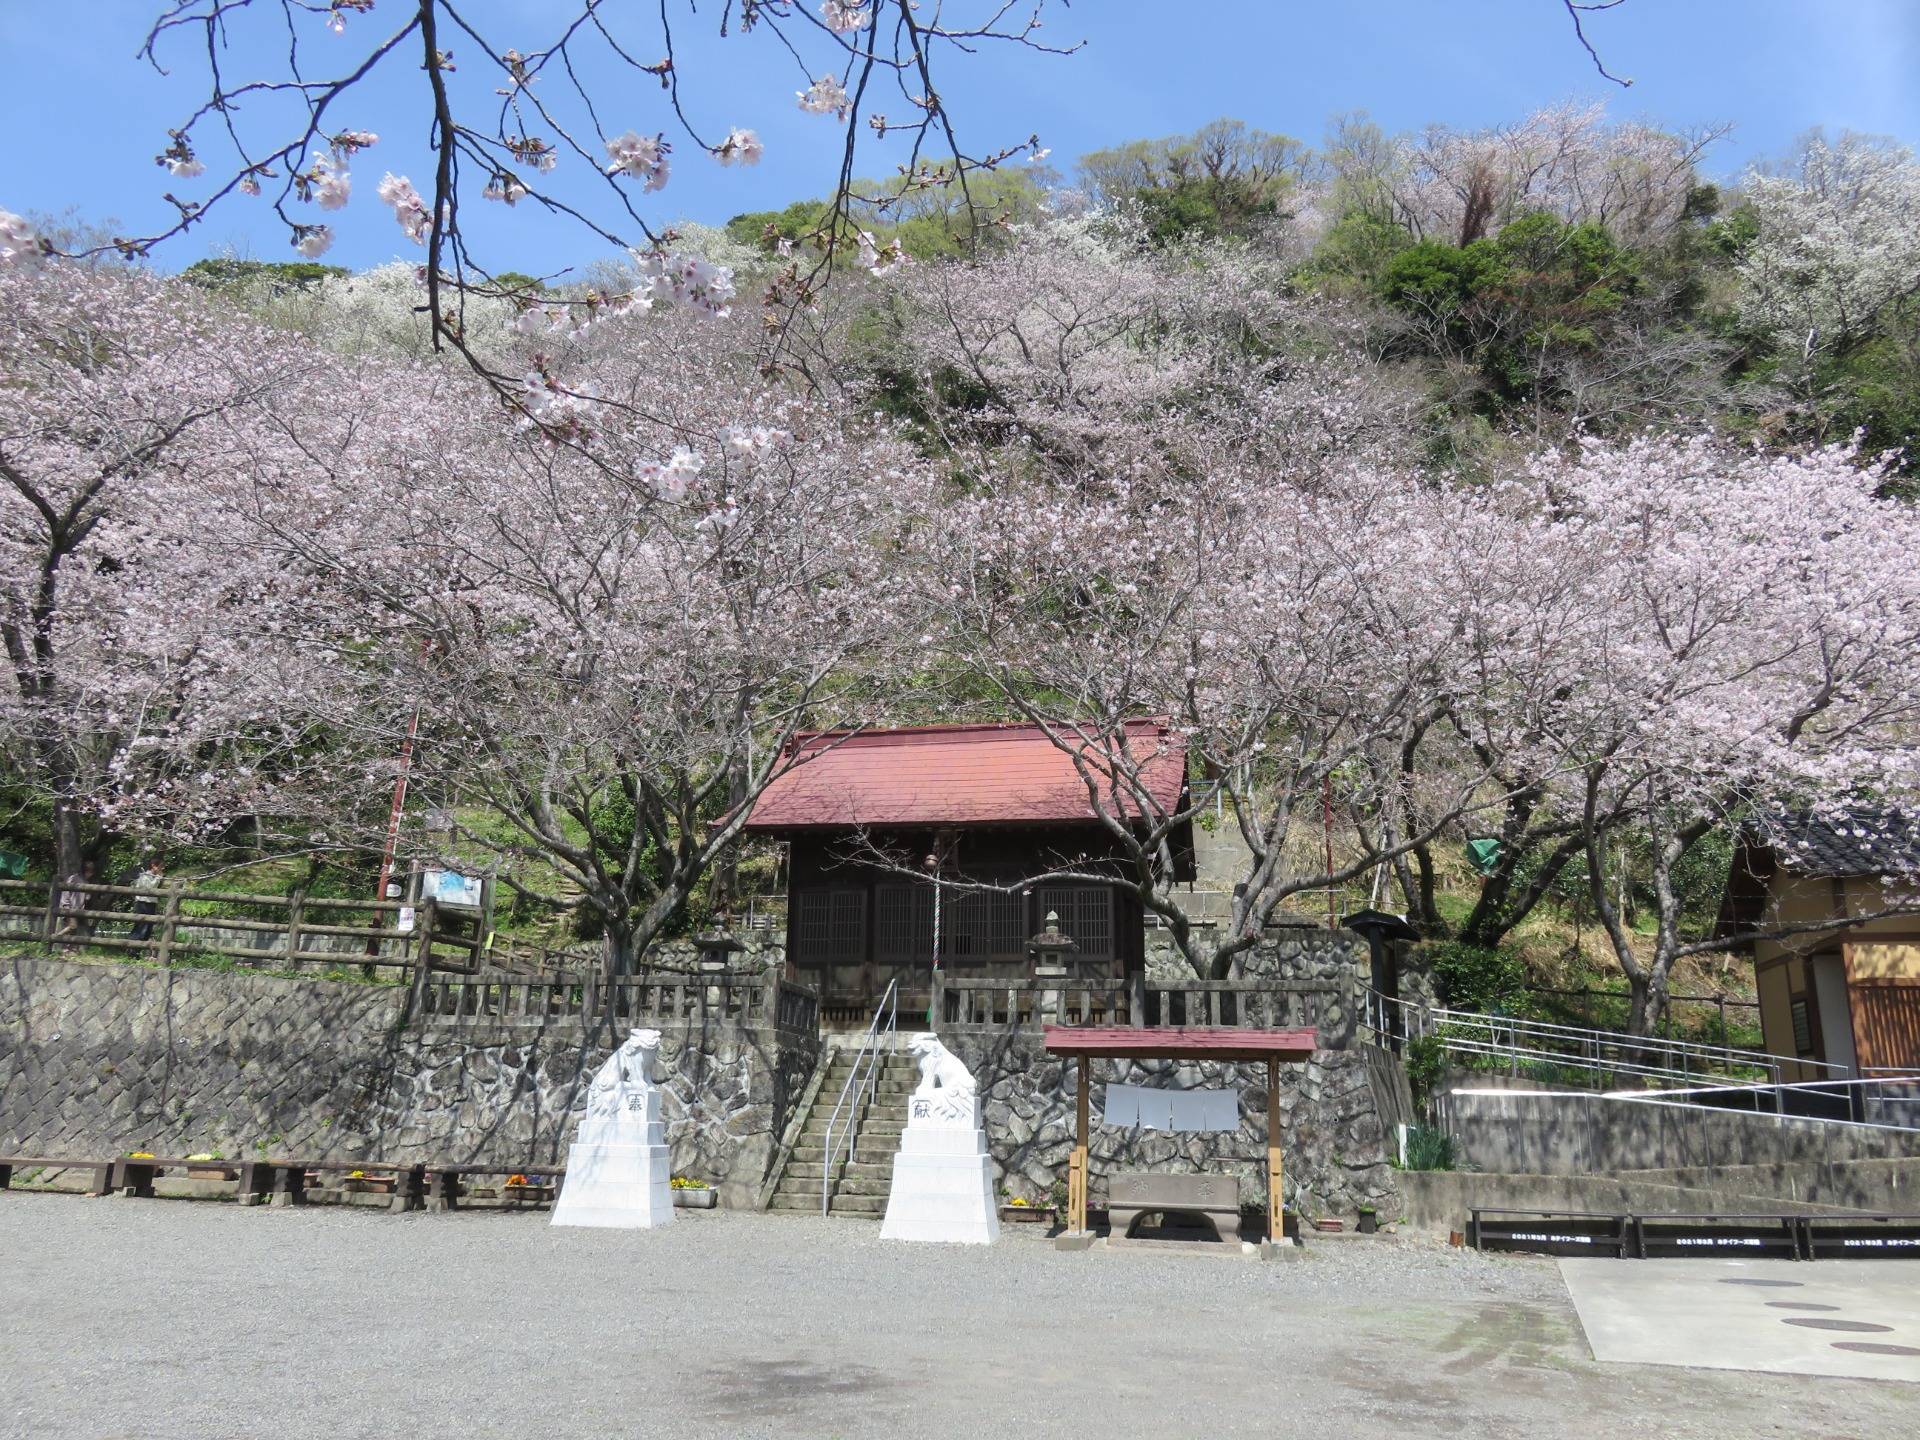 This is Yasaka Shrine, the main cherry blossom area in Kanbara.